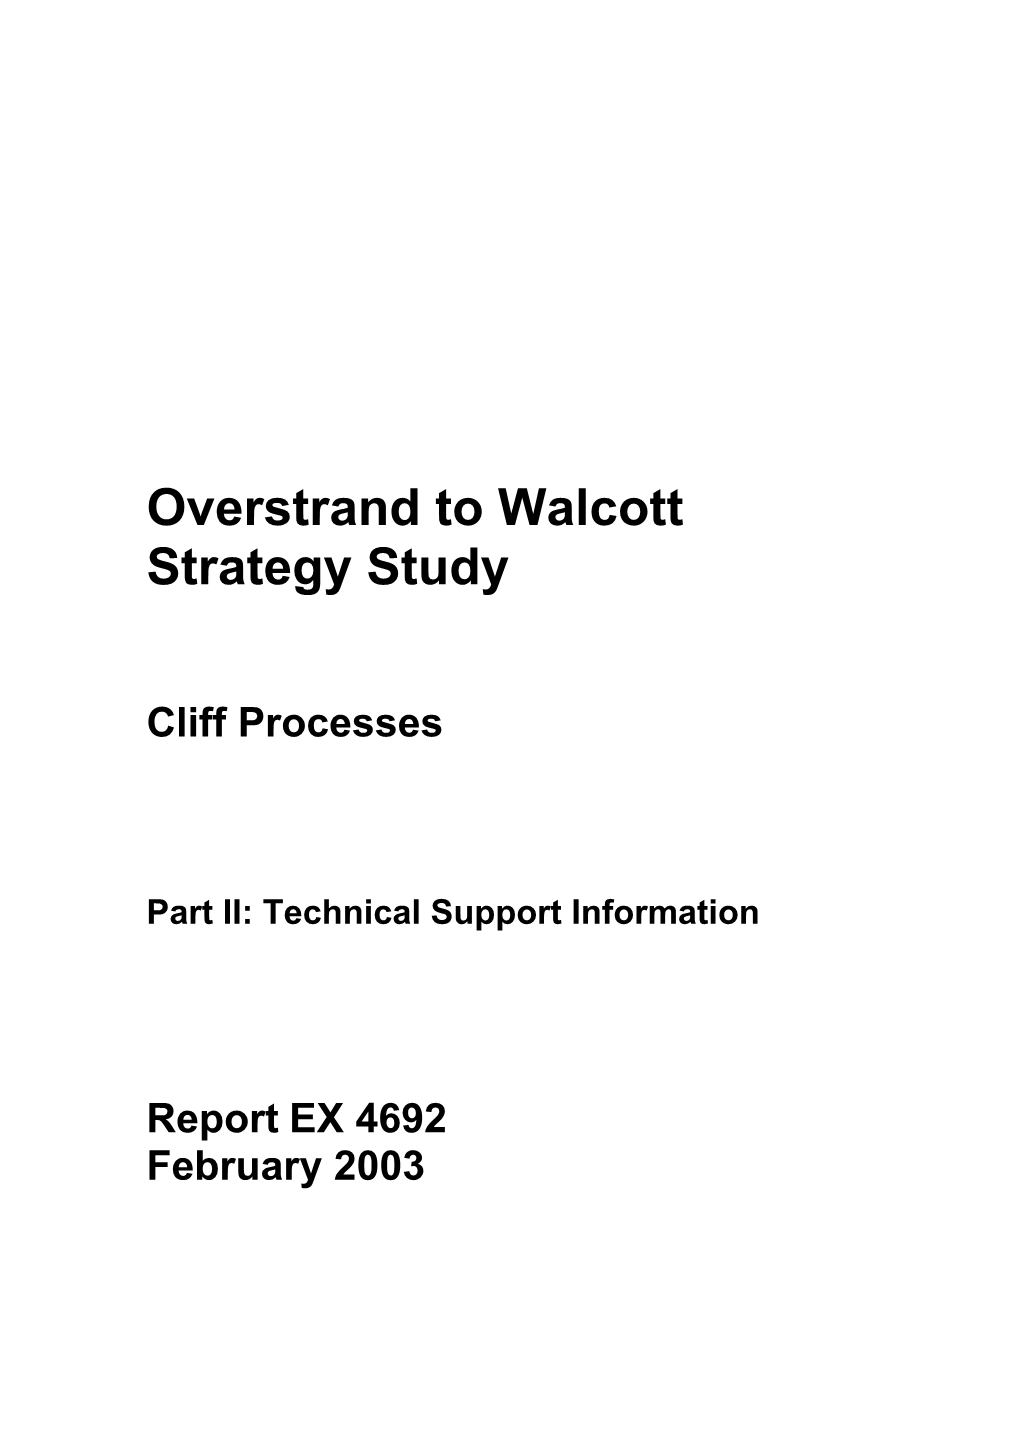 Overstrand to Walcott Strategy Study